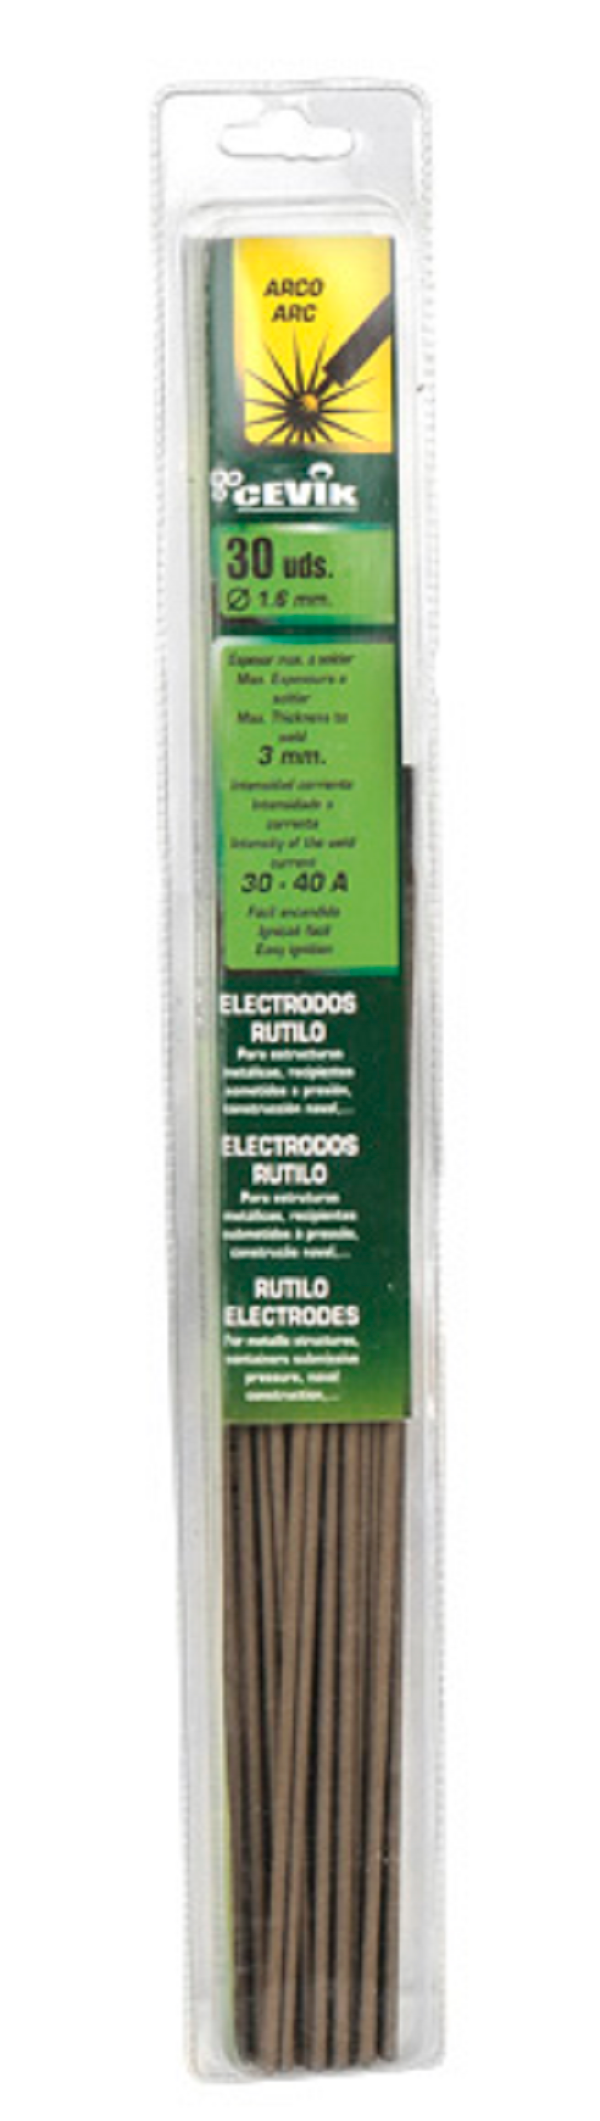 50 electrodos CEVIK PRO de rutilo - 2.5mm de ø